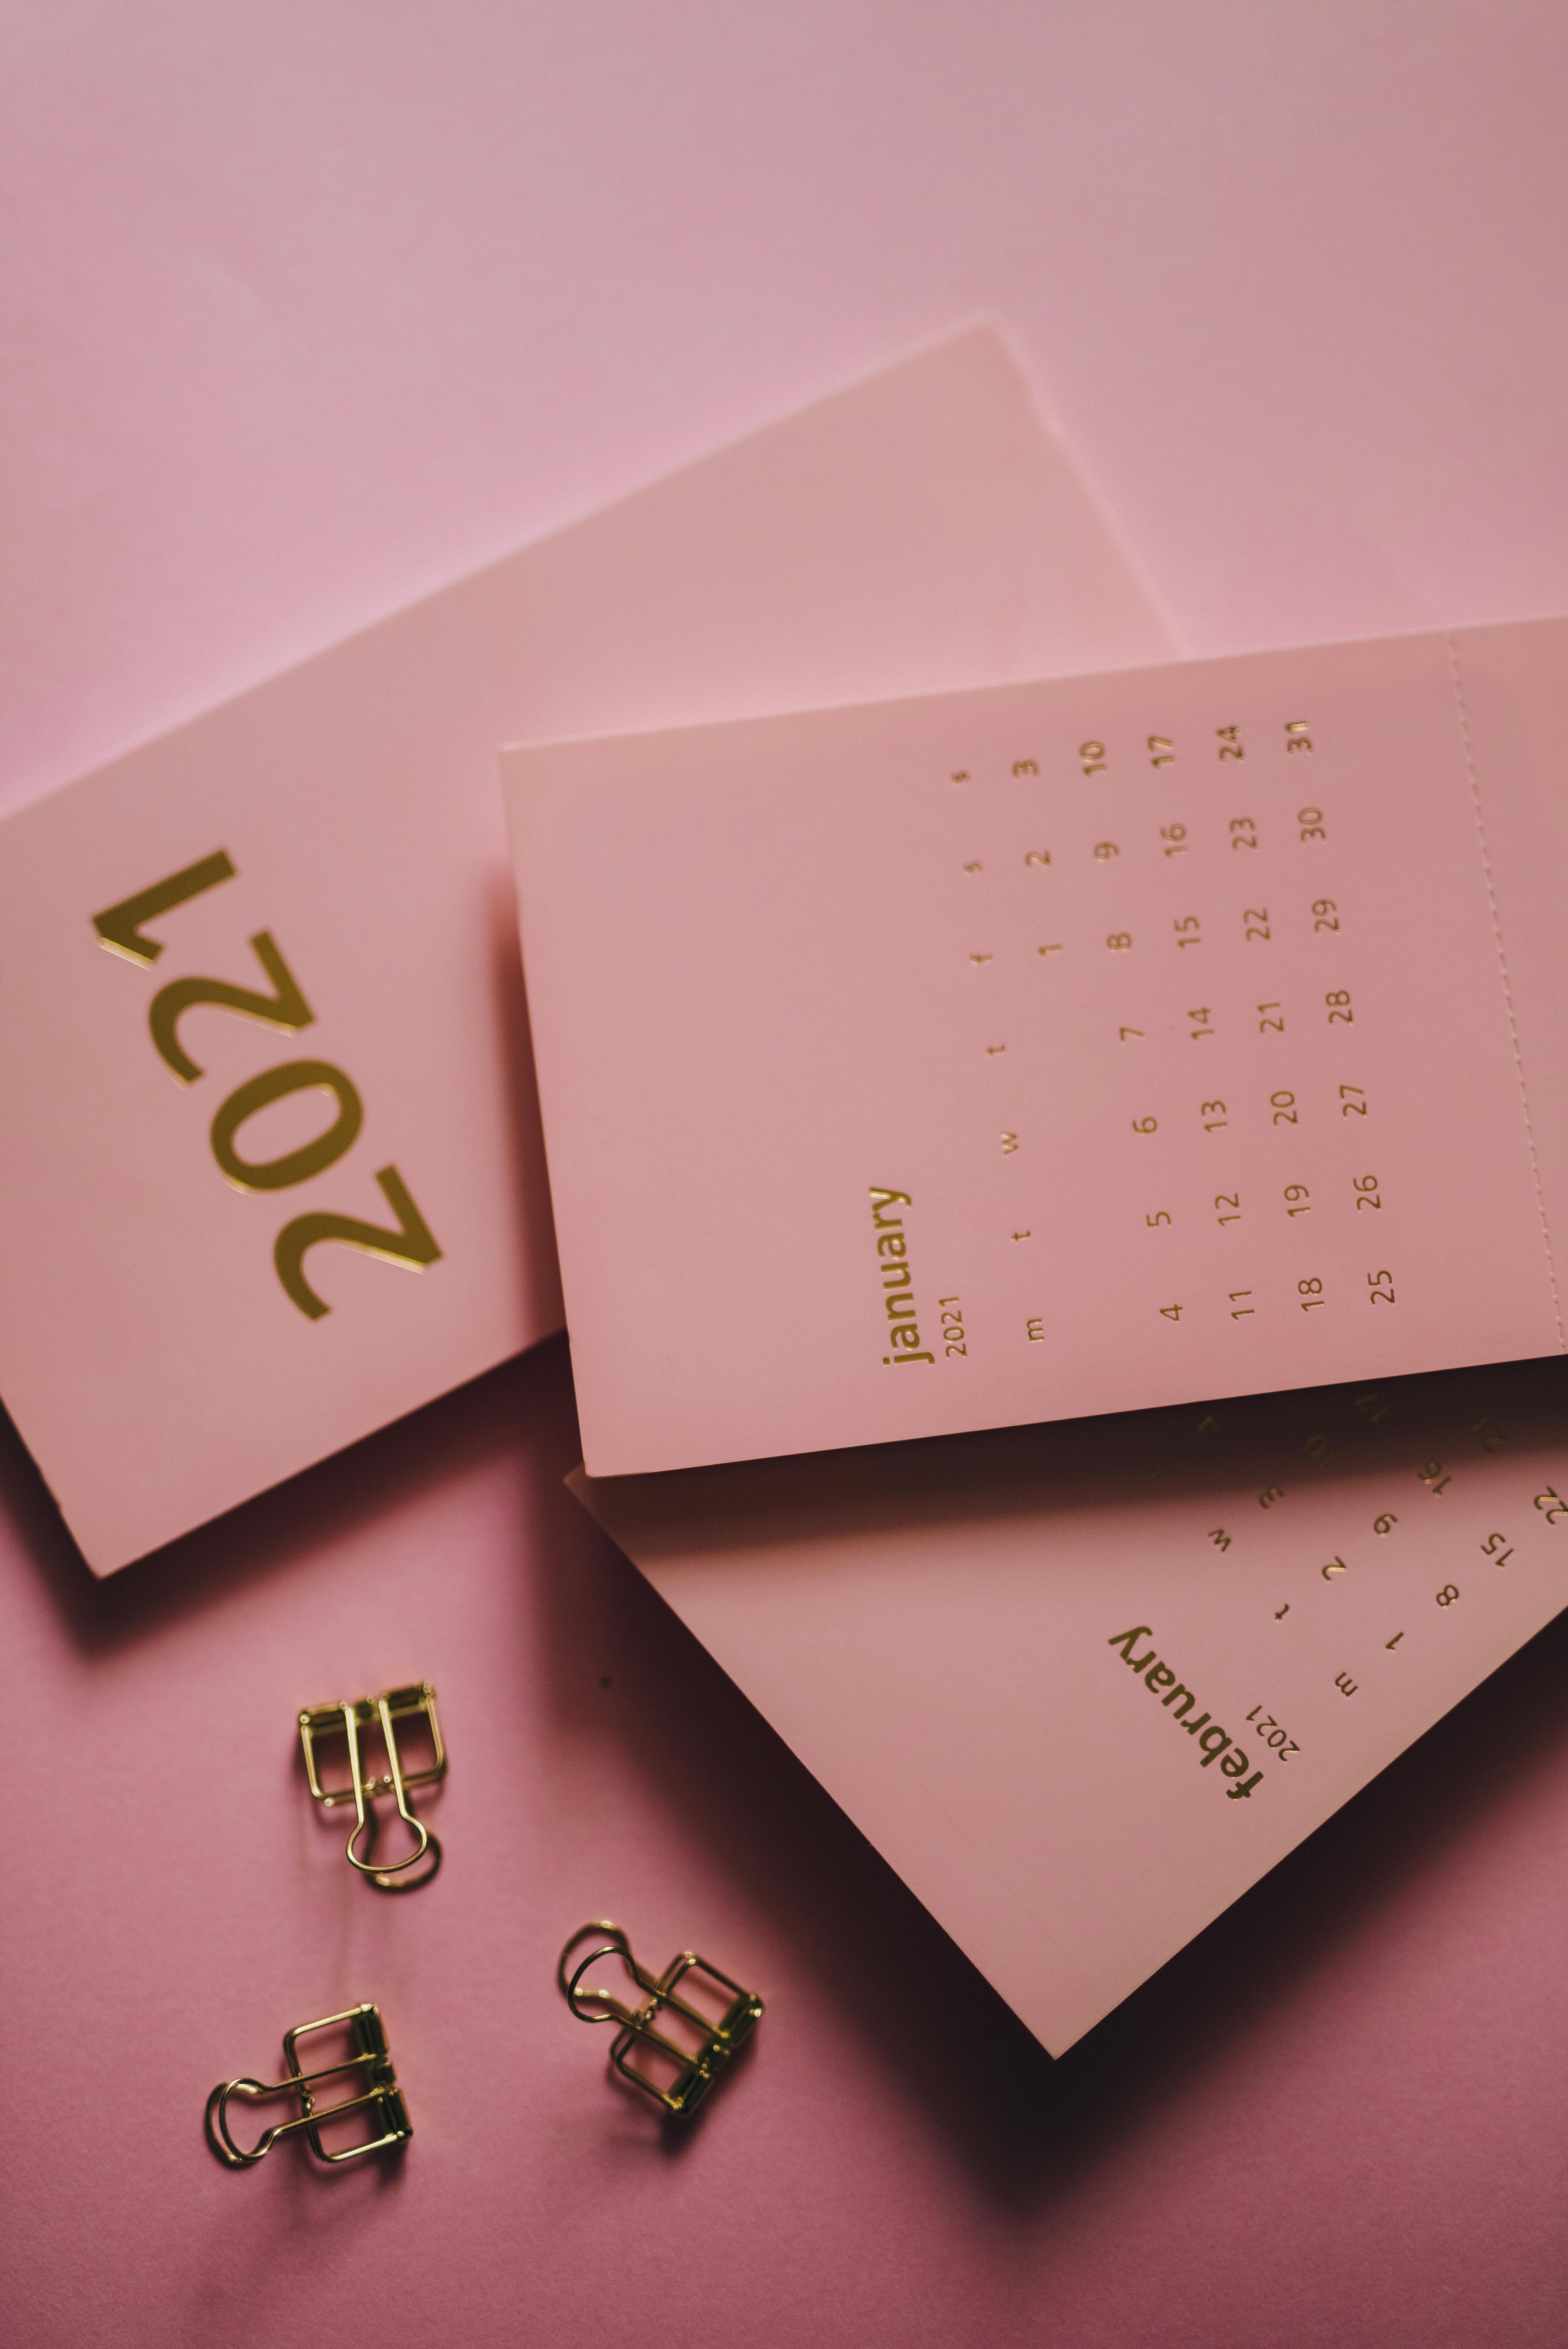 modern calendars near metal clips on pink background